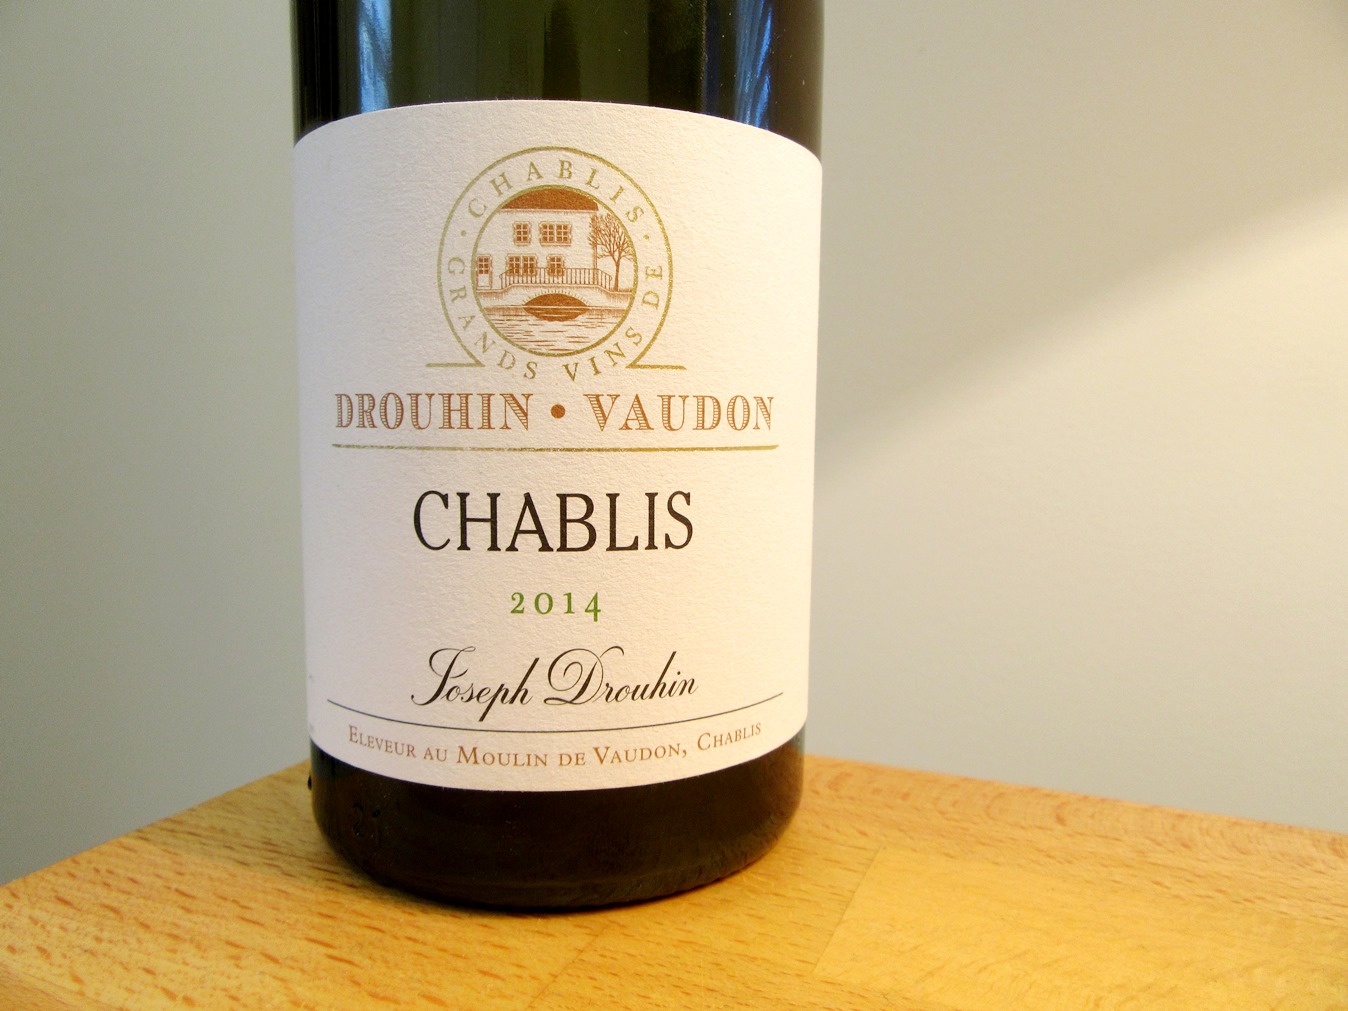 Joseph Drouhin, Drouhin, Vaudon Chablis,2014, Burgundy, France, Wine Casual